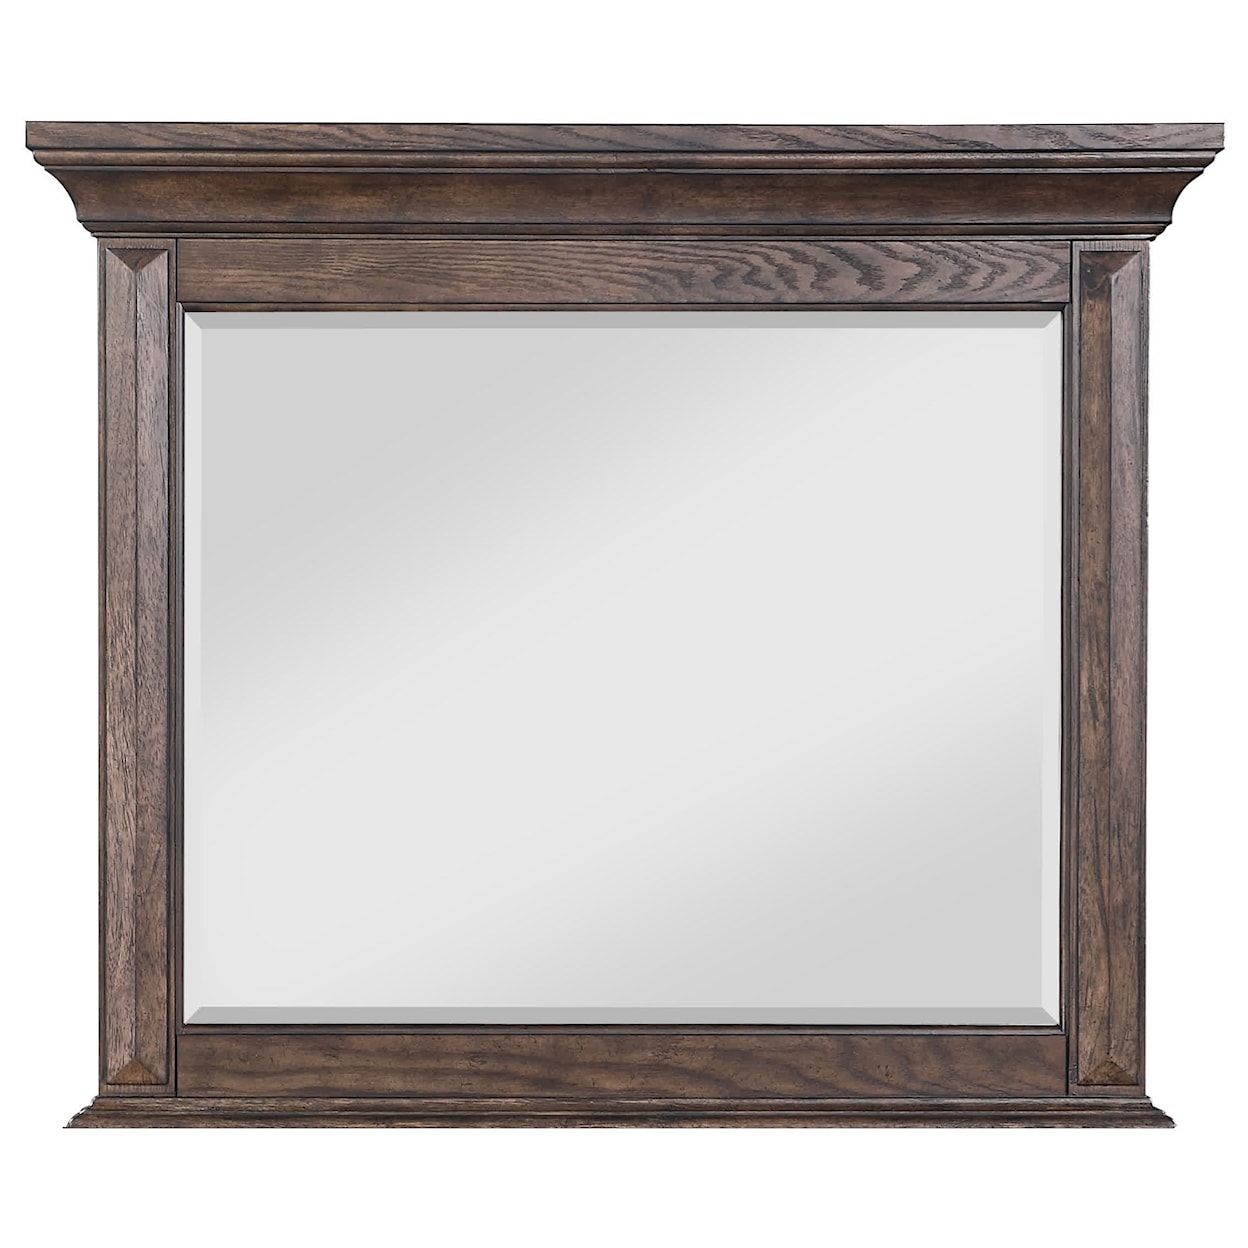 New Classic Furniture Mar Vista Mirror